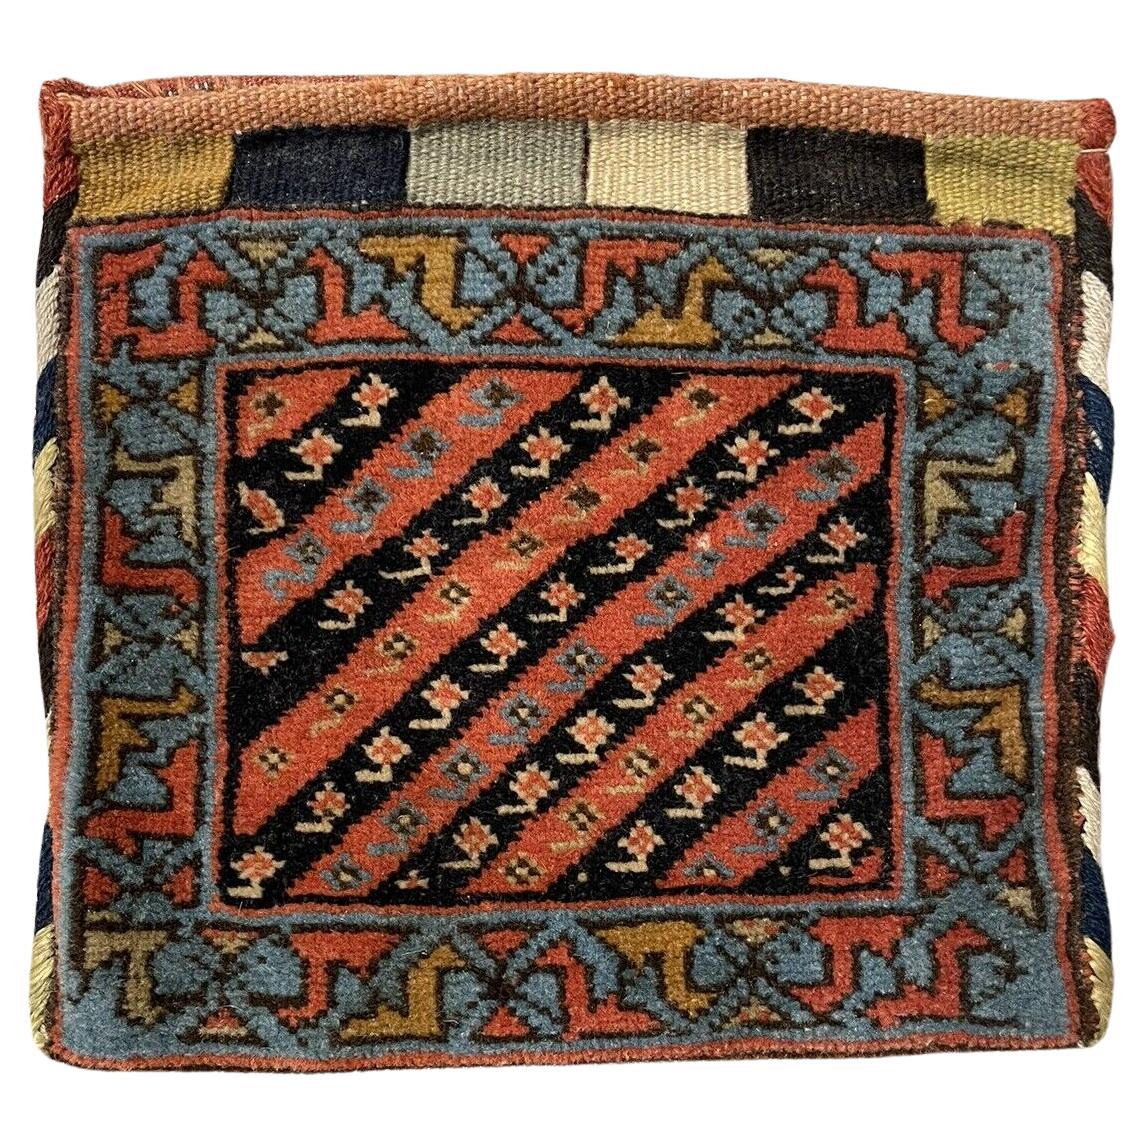 Handmade Antique Persian Gashkai Small Bag 9" x 9", 1900s - 1N14